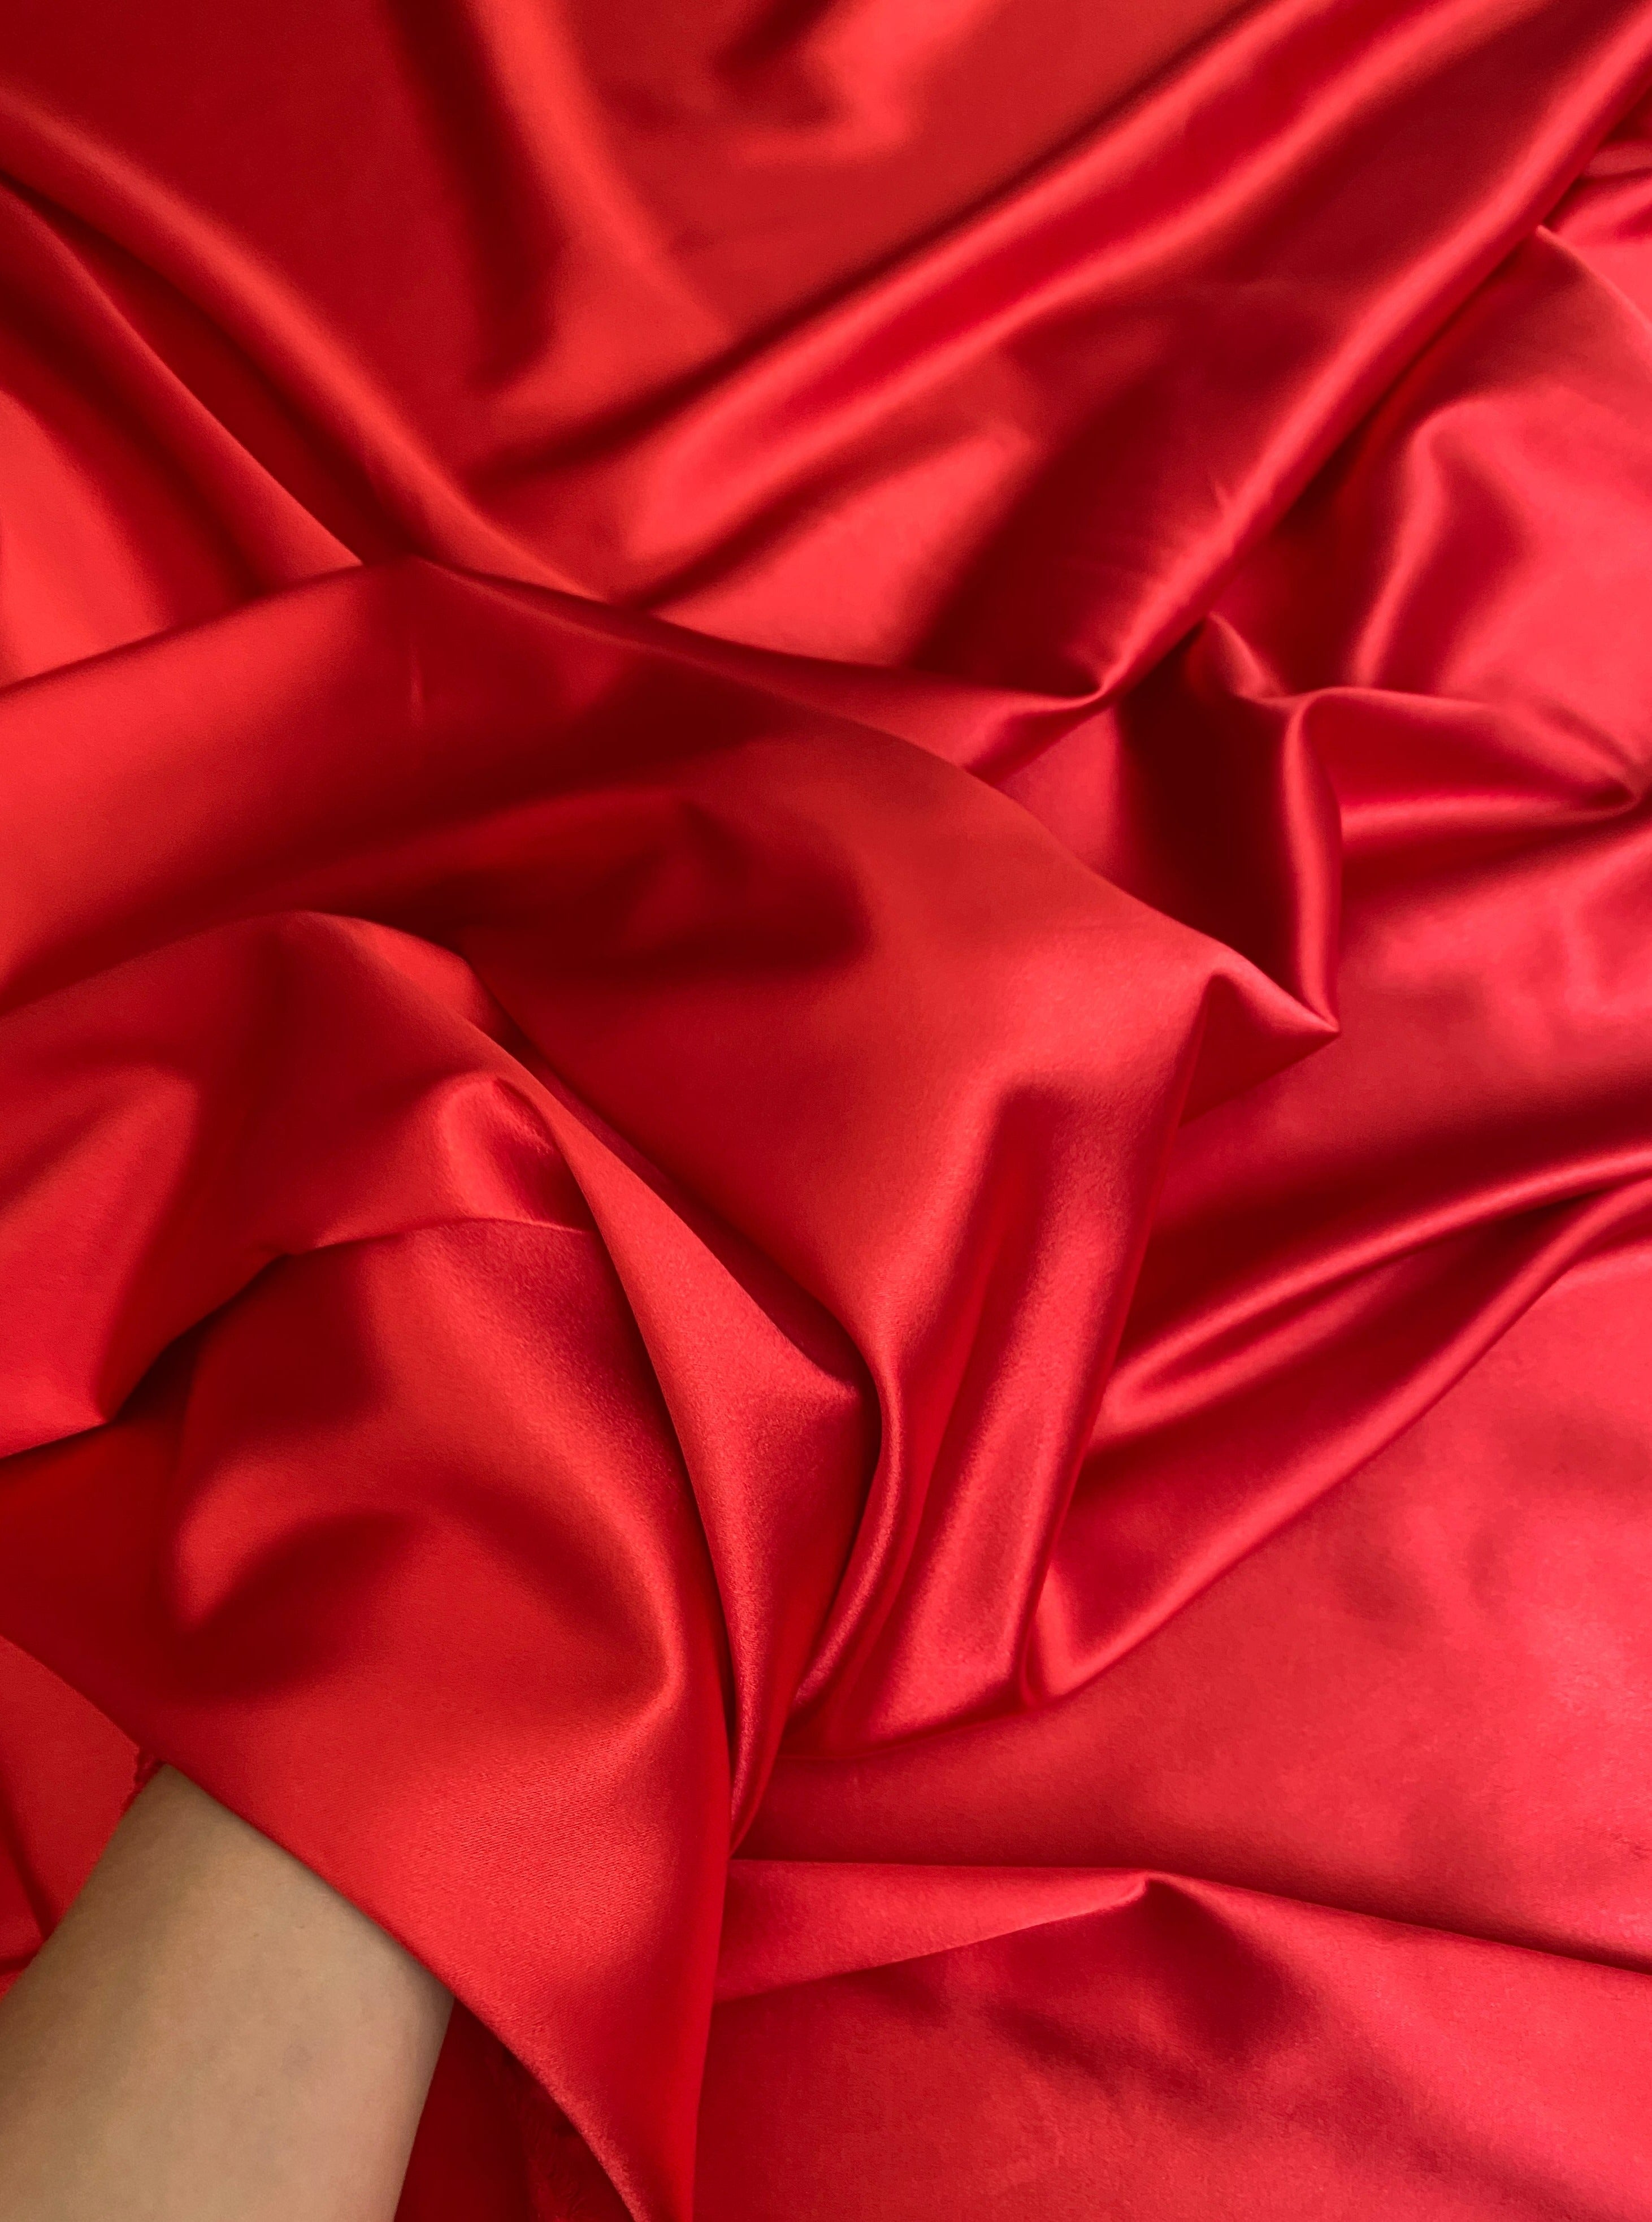 Red silk satin fabric high quality